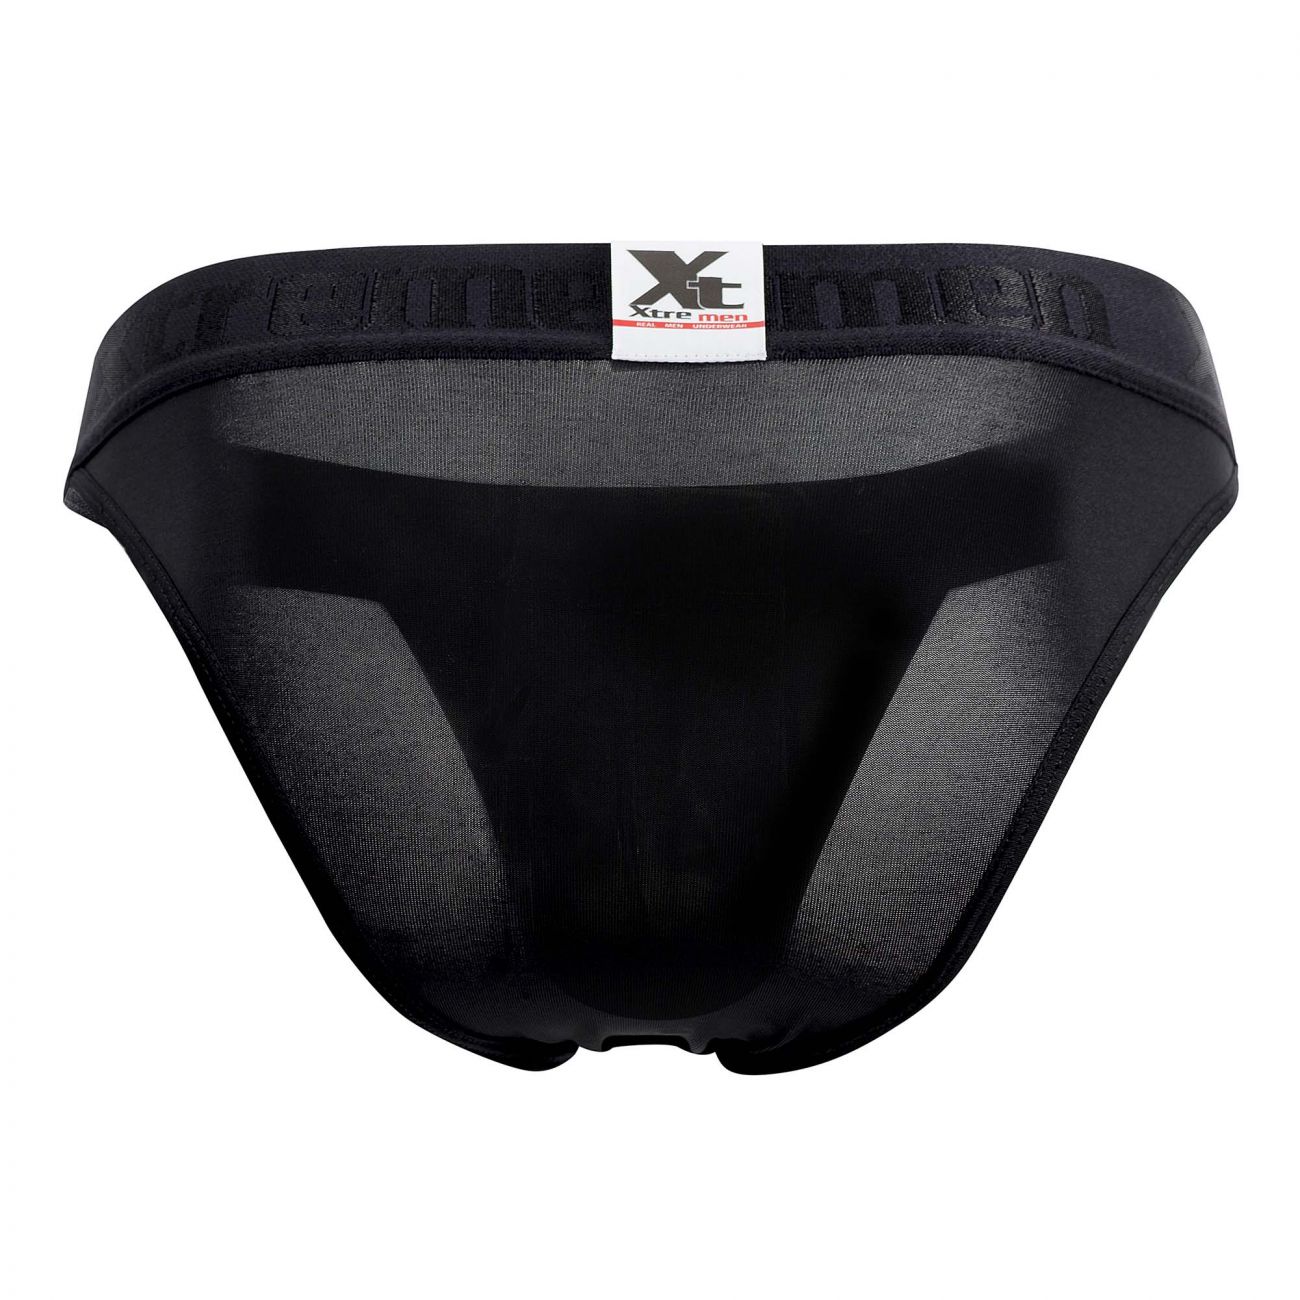 Mens Underwear: Xtremen 91057-3 3PK Big Pouch Bikini | eBay